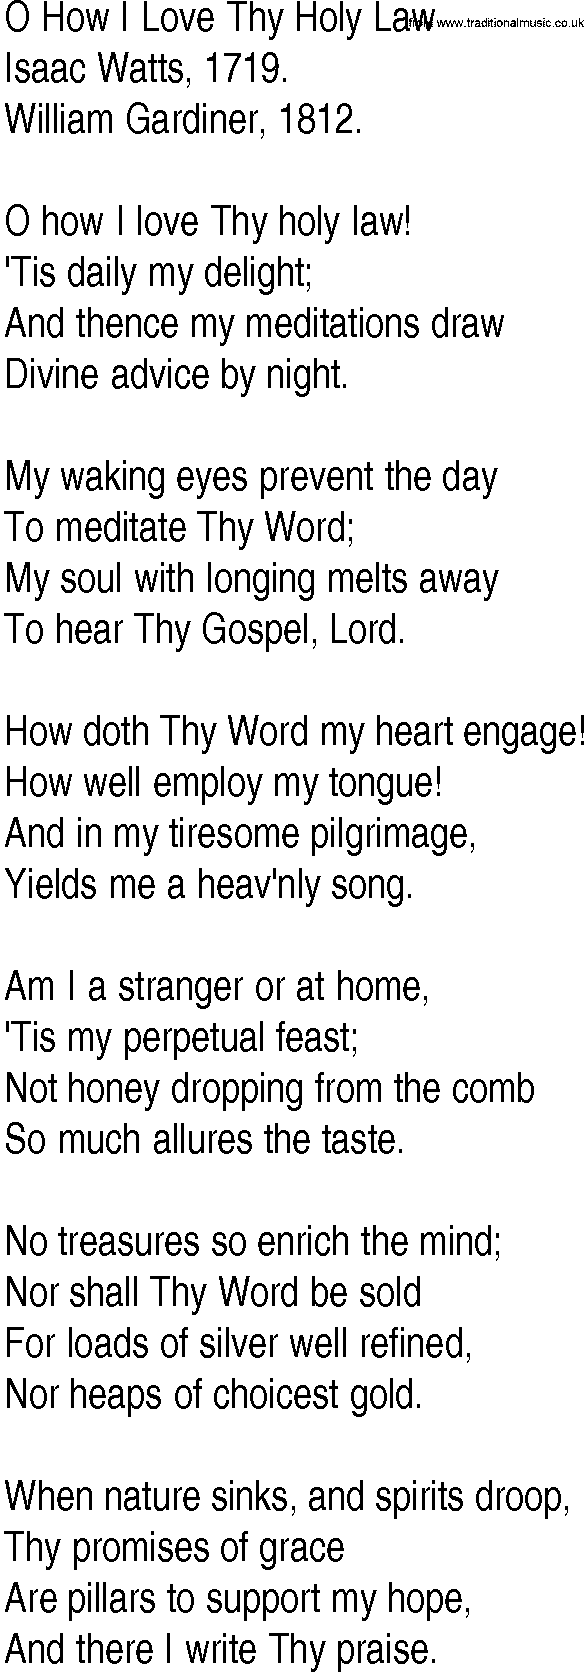 Hymn and Gospel Song: O How I Love Thy Holy Law by Isaac Watts lyrics